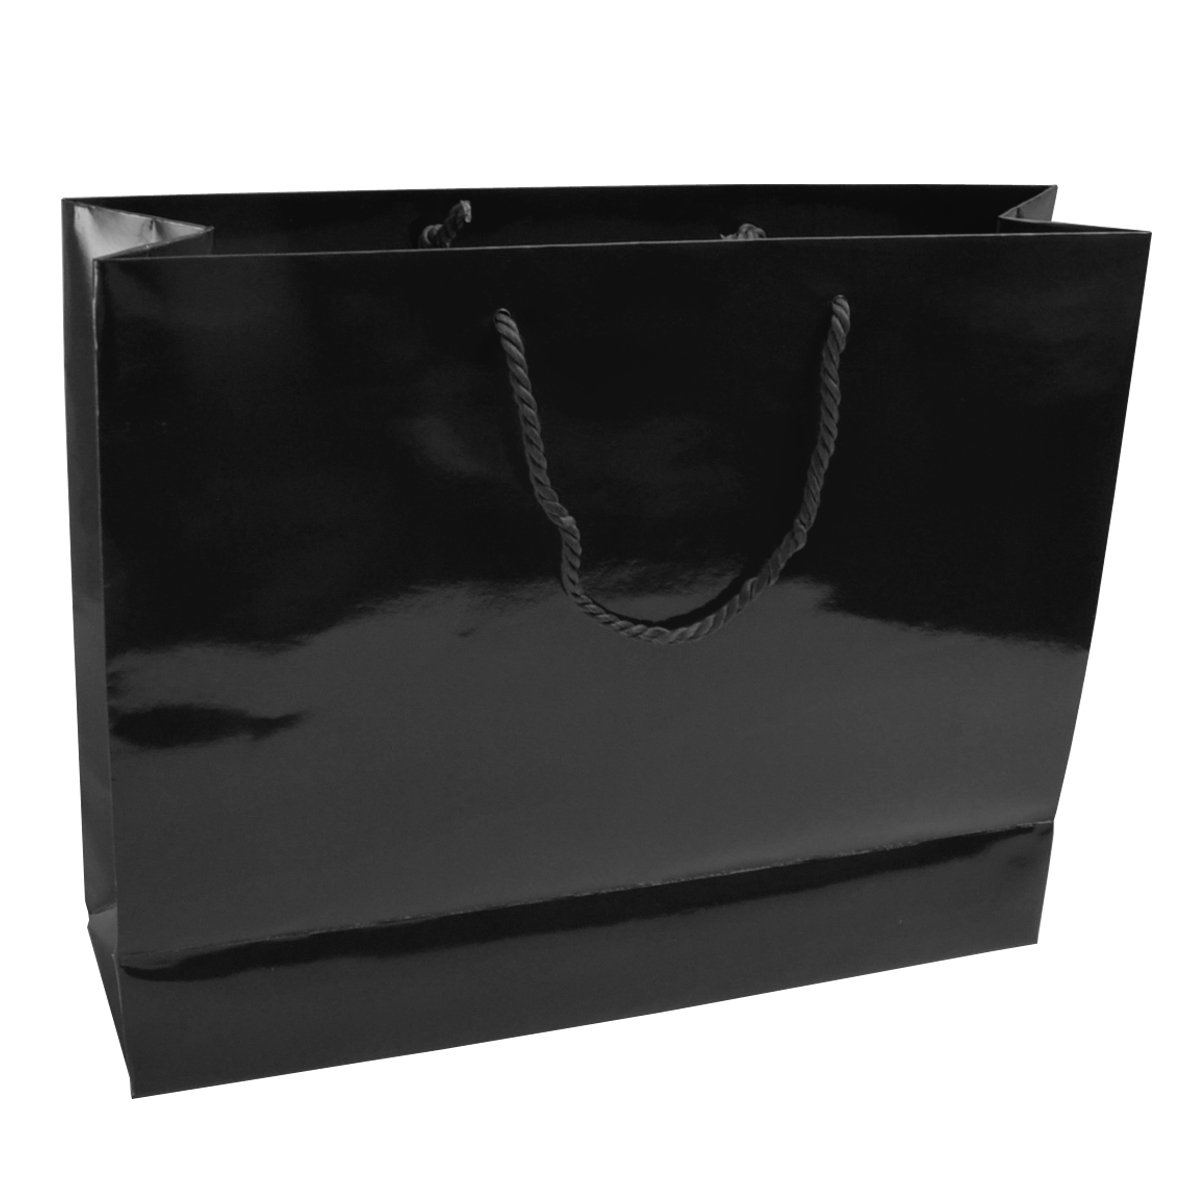 Sac cadeau luxe noir brillant cordon mercerie 46 x 10 x 33 cm